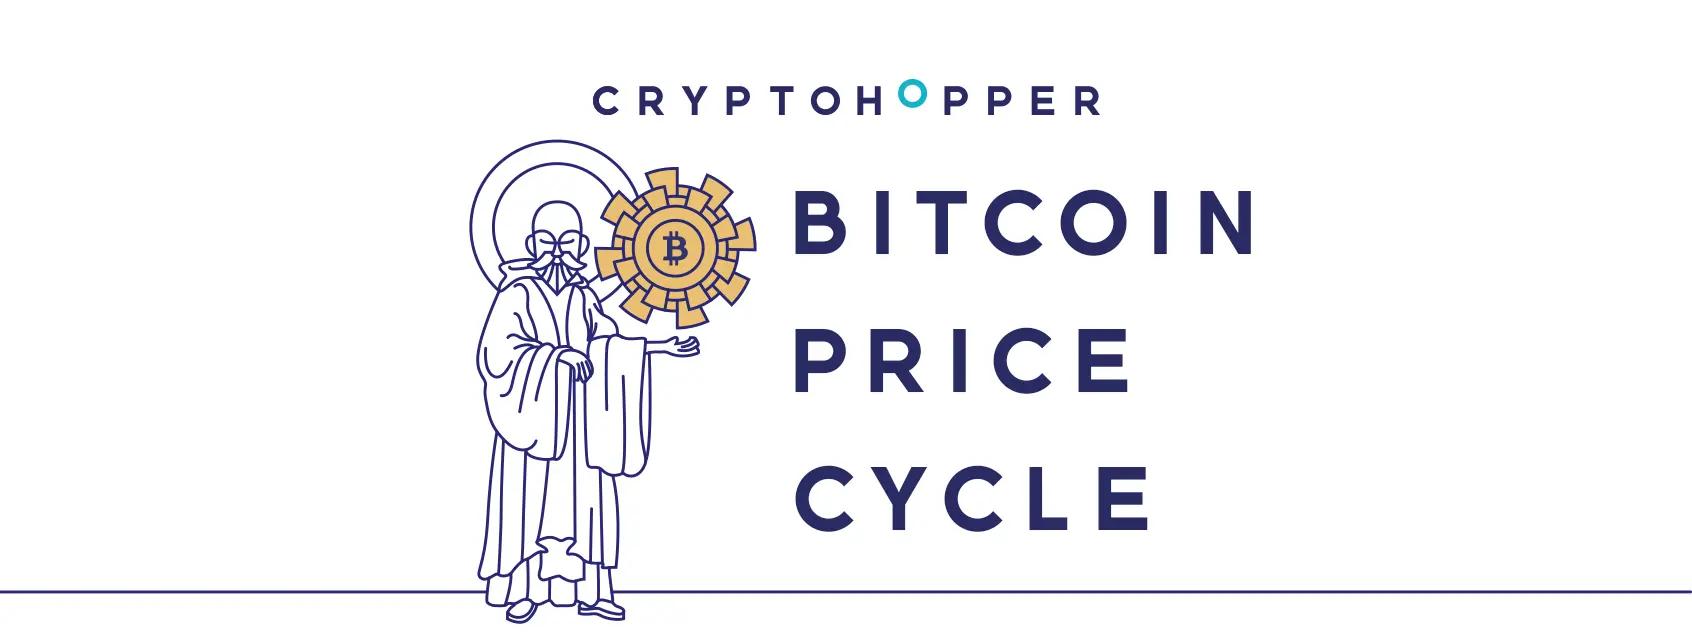 Bitcoin Price Cycle 2019